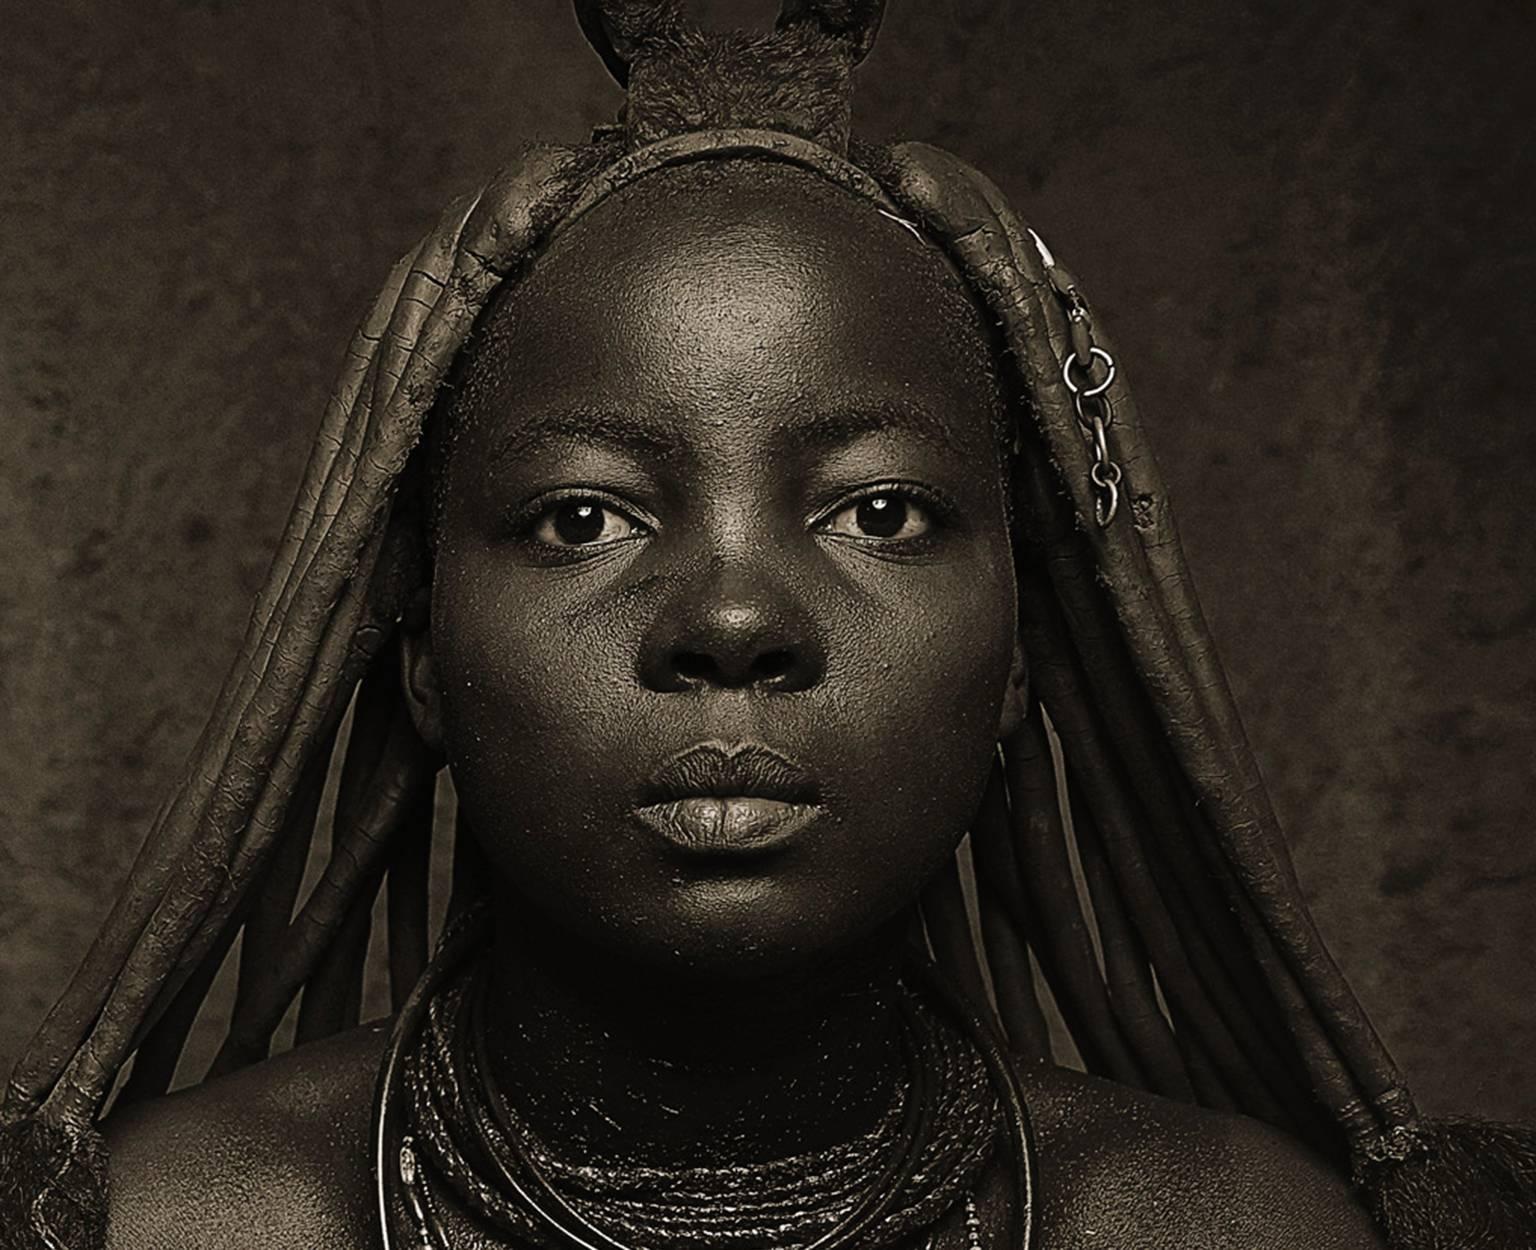 Chris Gordaneer, “Himba Women Epupa Falls 13”, Namibia, 2016.
Chromogenic C Print, 30